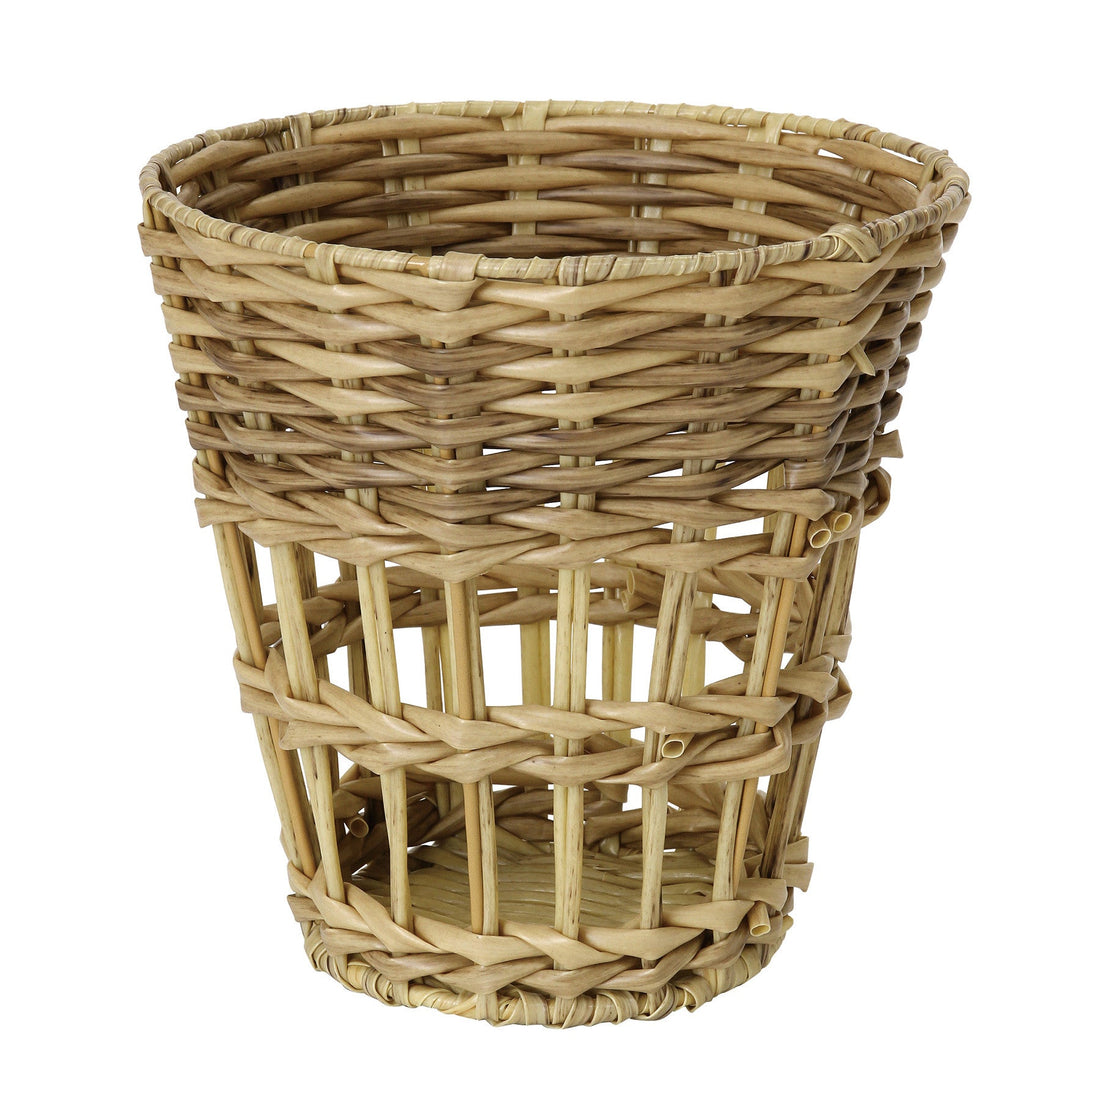 Re-purposed Plastic Baskets